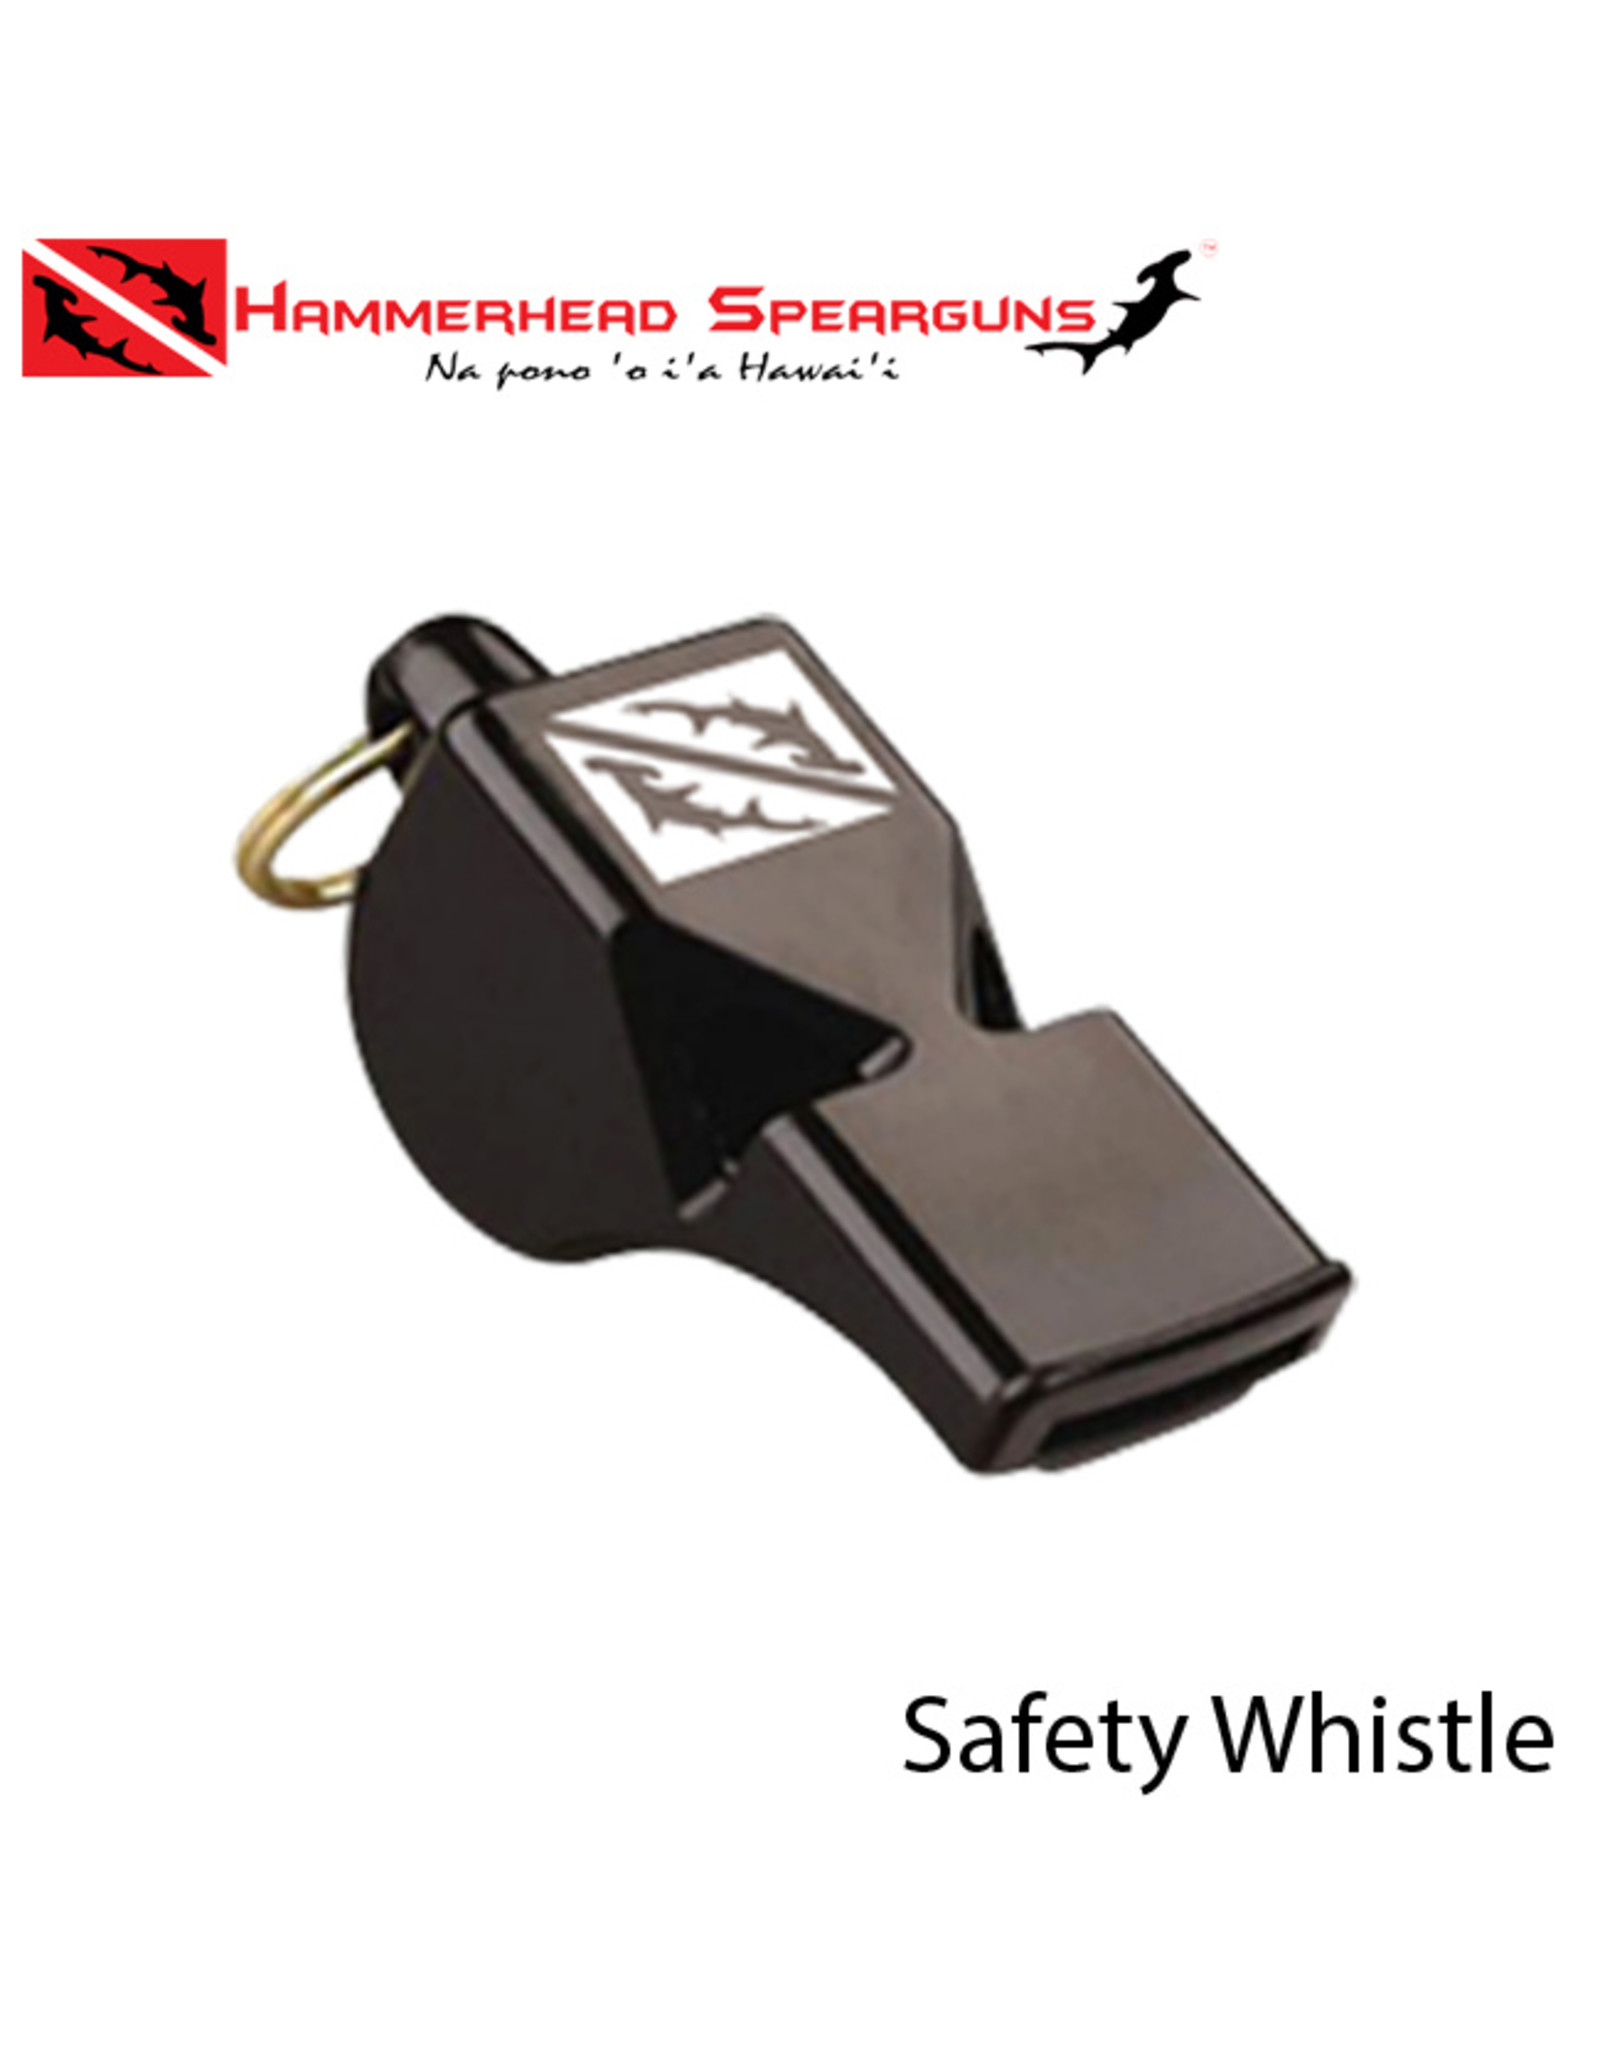 HAMMERHEAD SPEARGUNS Hammerhead Safety Whistle